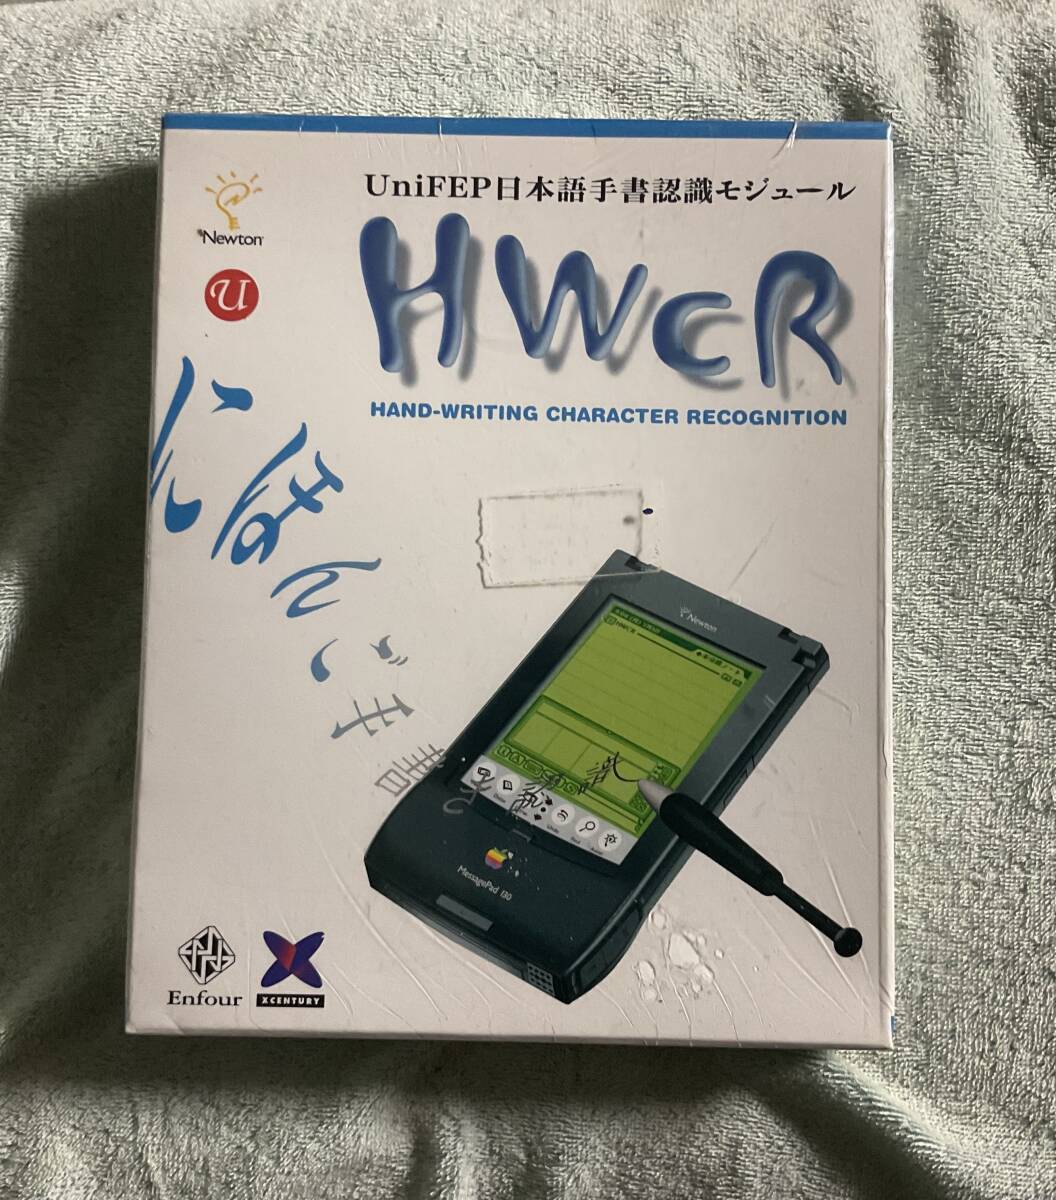 ◇Apple Newton MessagePad用 HWCR 日本語手書認識モジュール◇_画像1